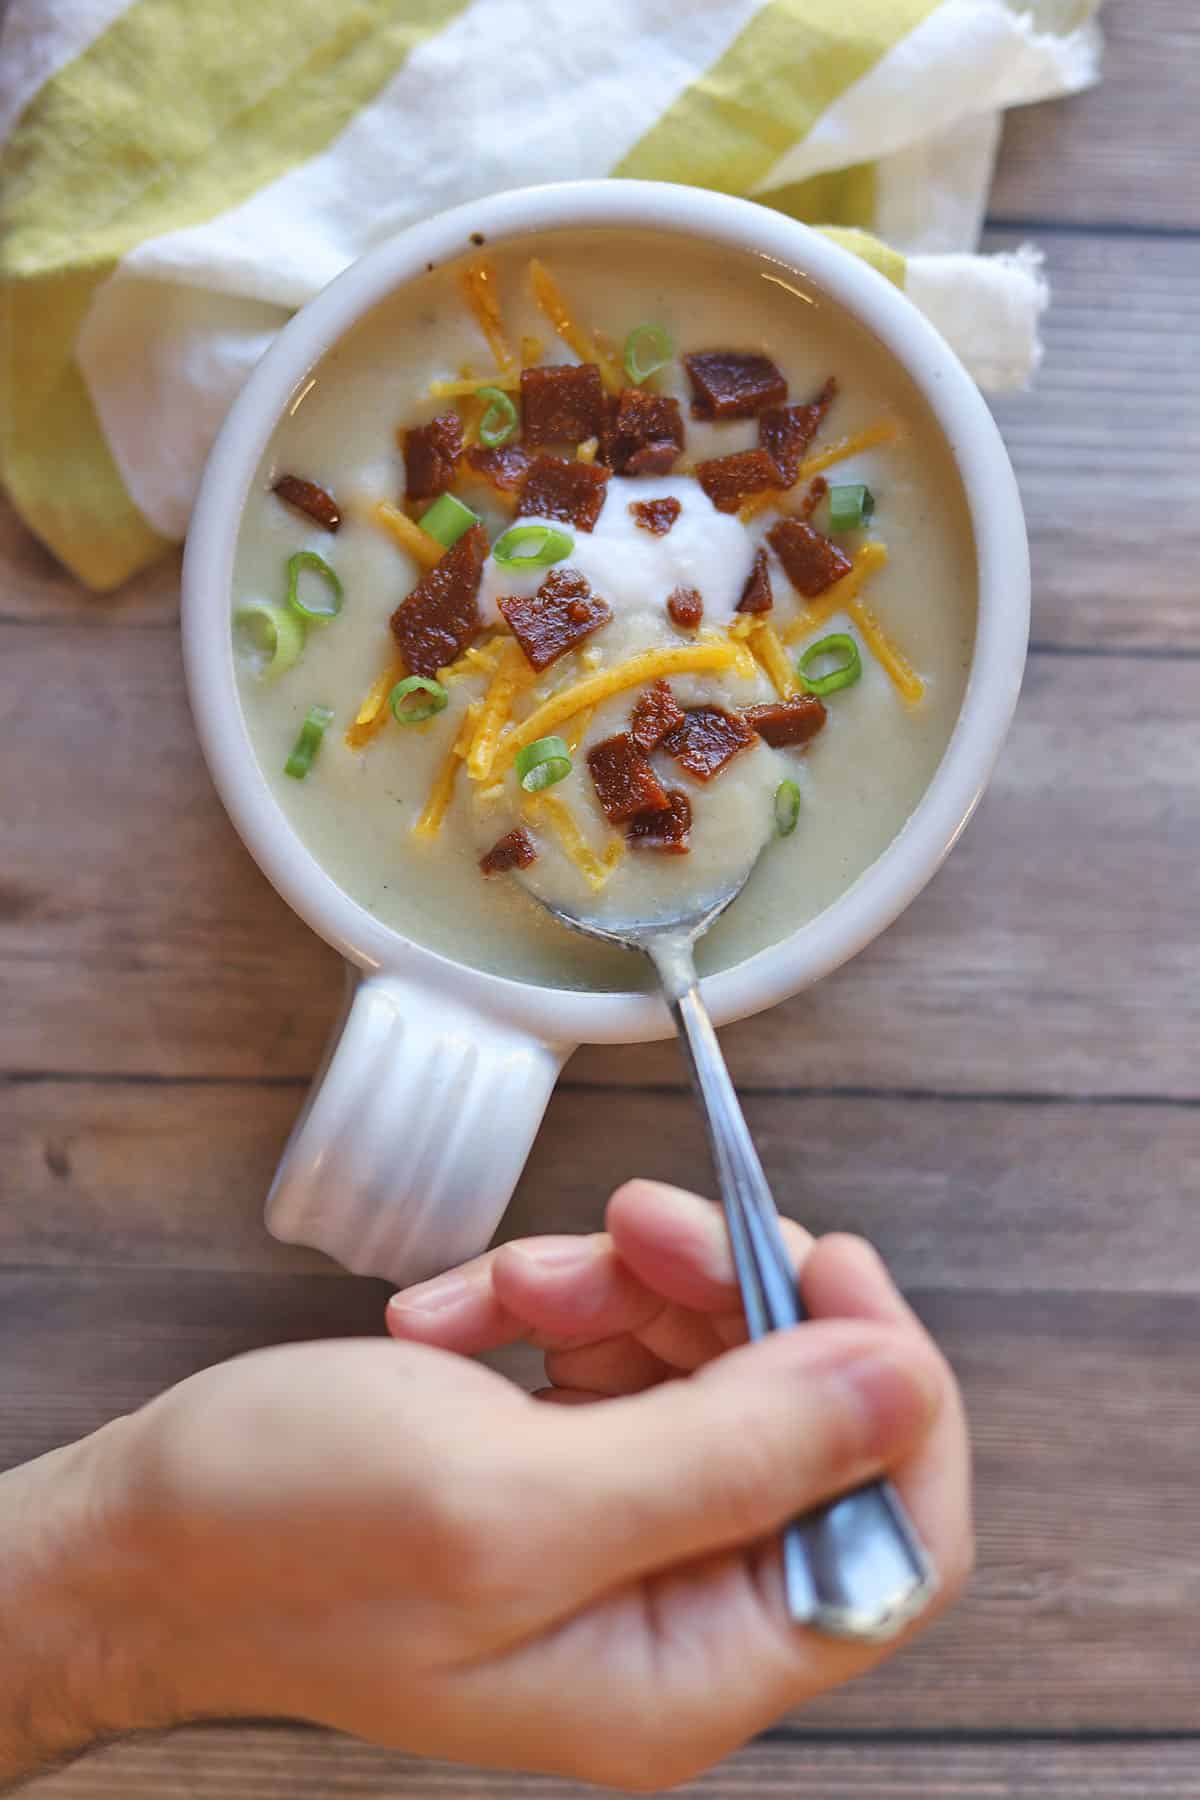 Spoon digging into vegan baked potato soup.